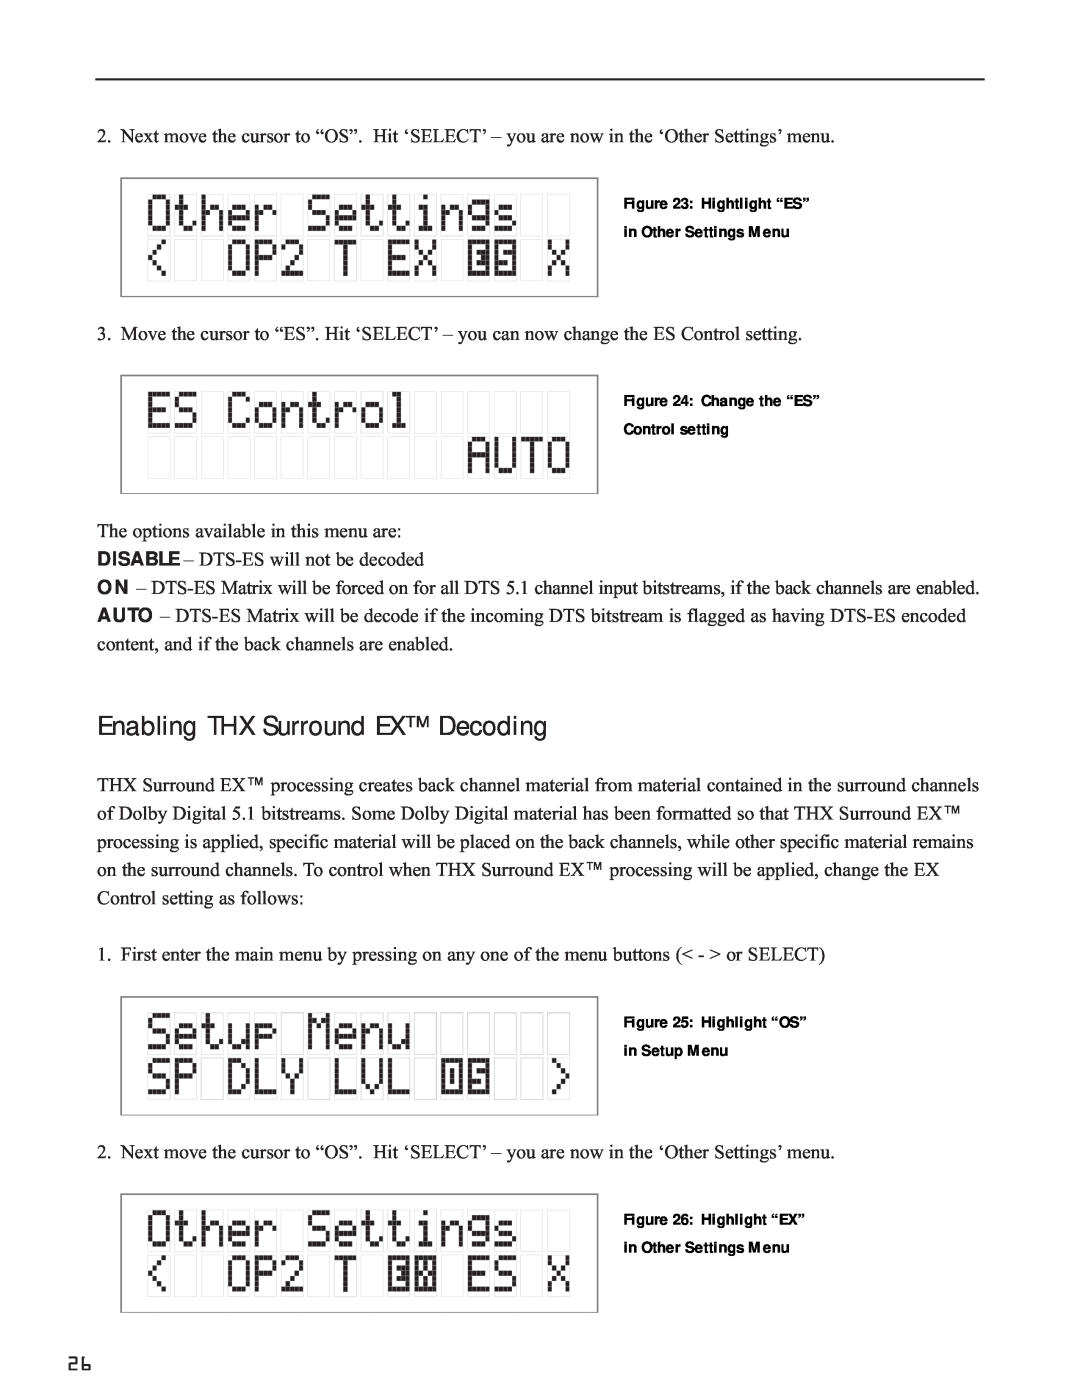 Bryston SP1.7 Series manual Enabling THX Surround EX Decoding, Hightlight “ES” in Other Settings Menu 